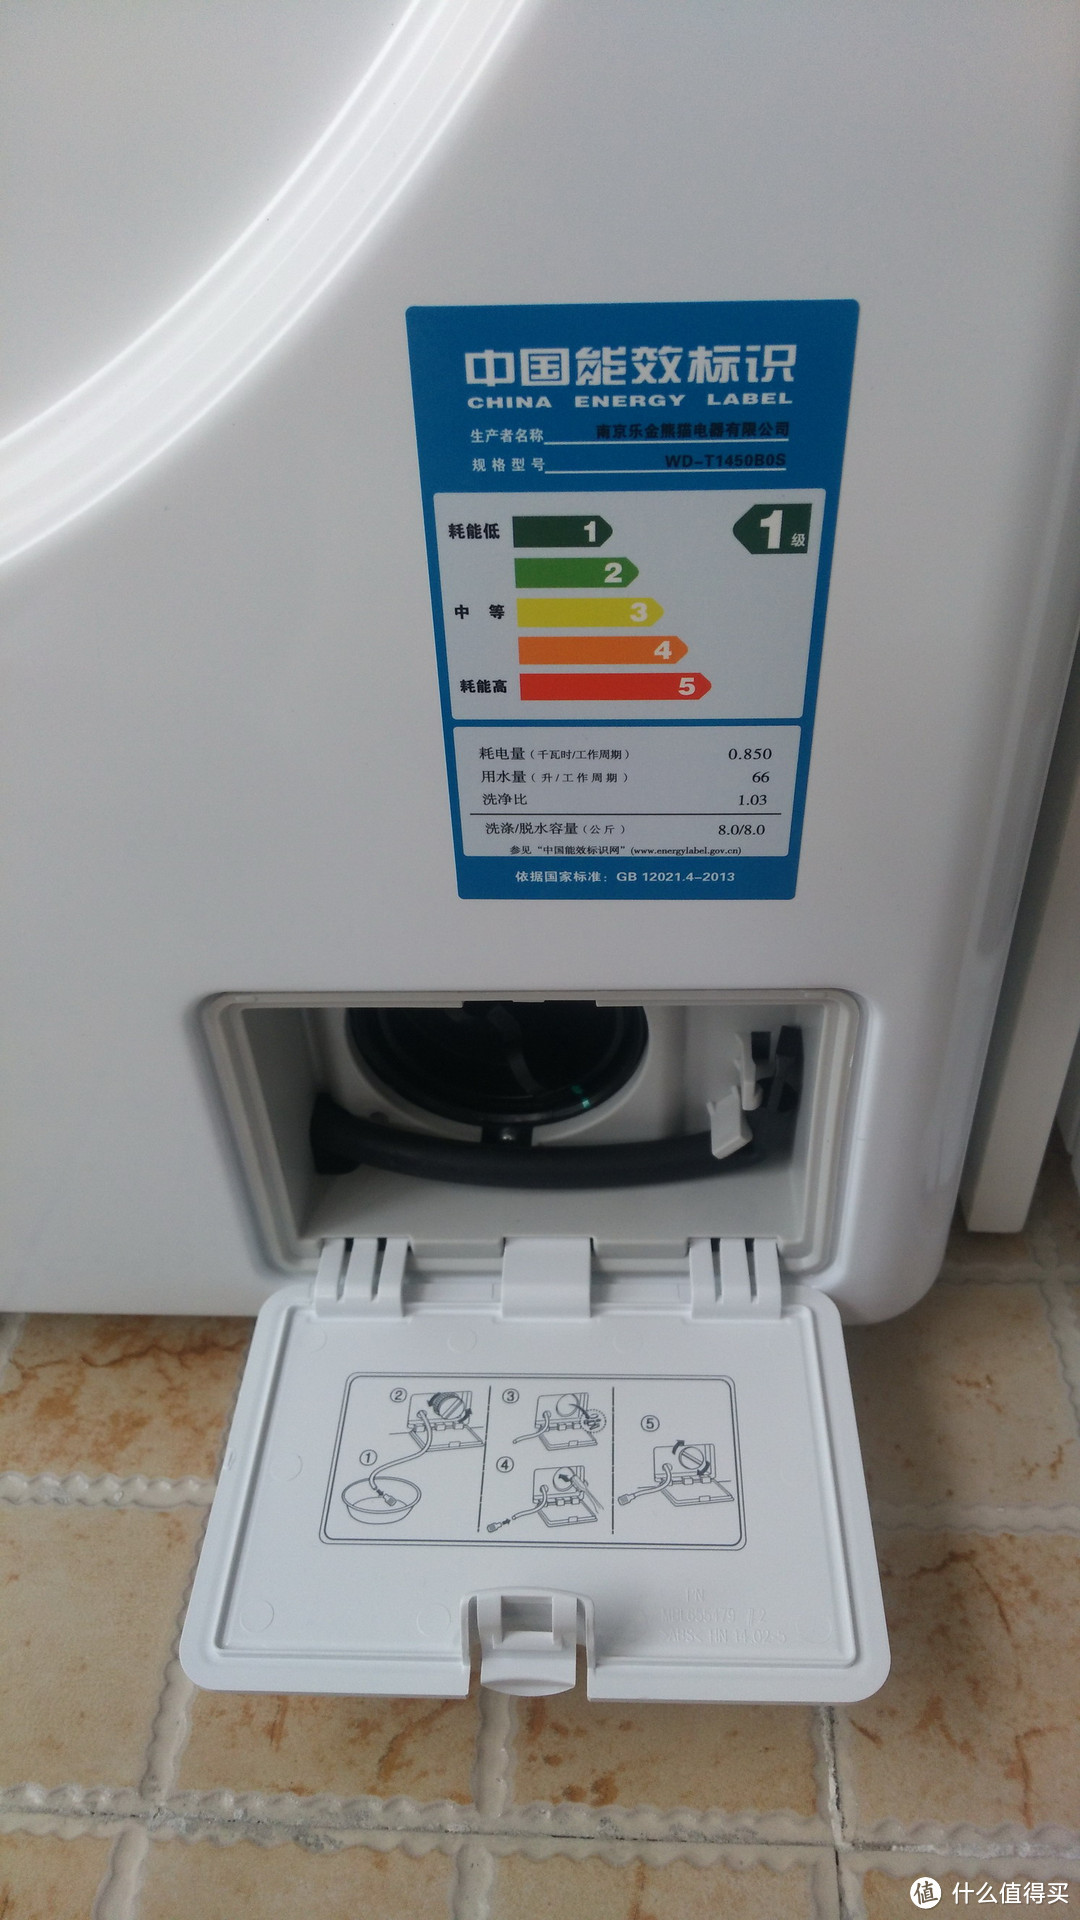 LG WD-T1450B5S 滚筒洗衣机 使用感受